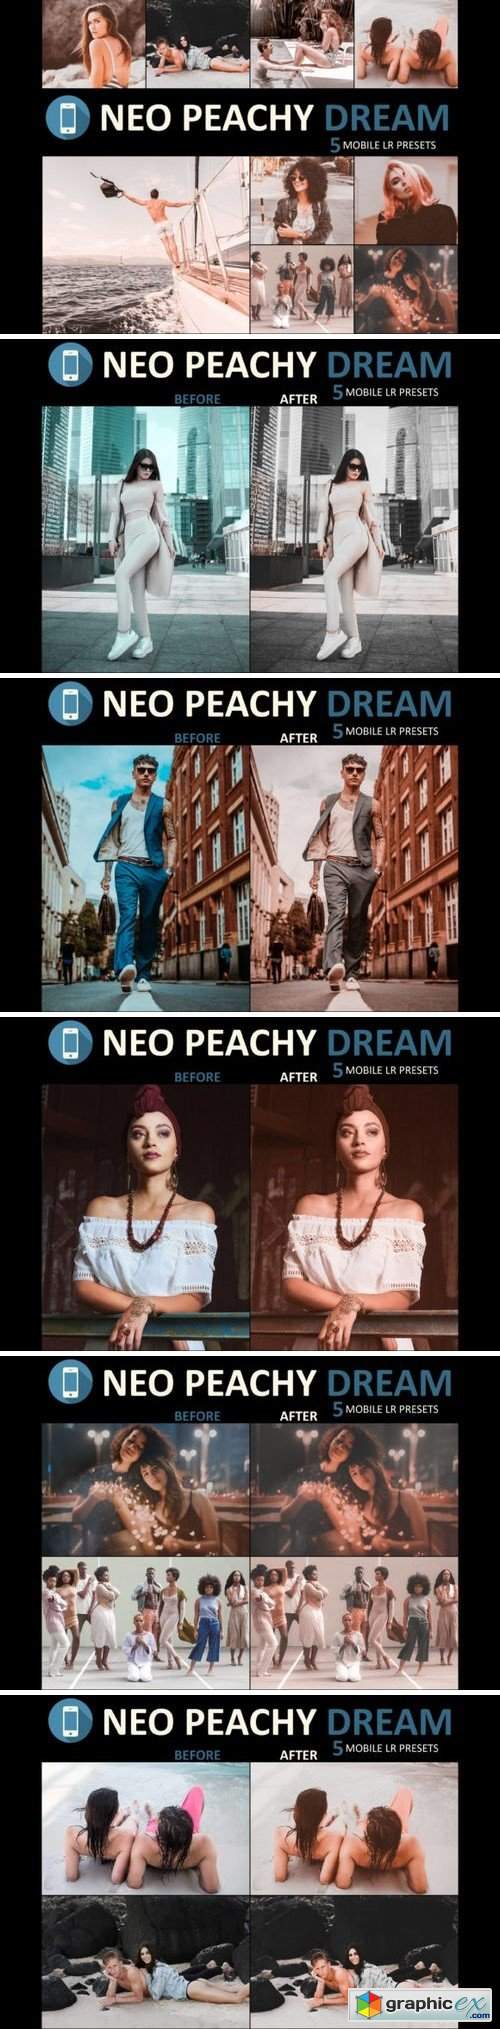 Neo Peachy Dream mobile lightroom presets